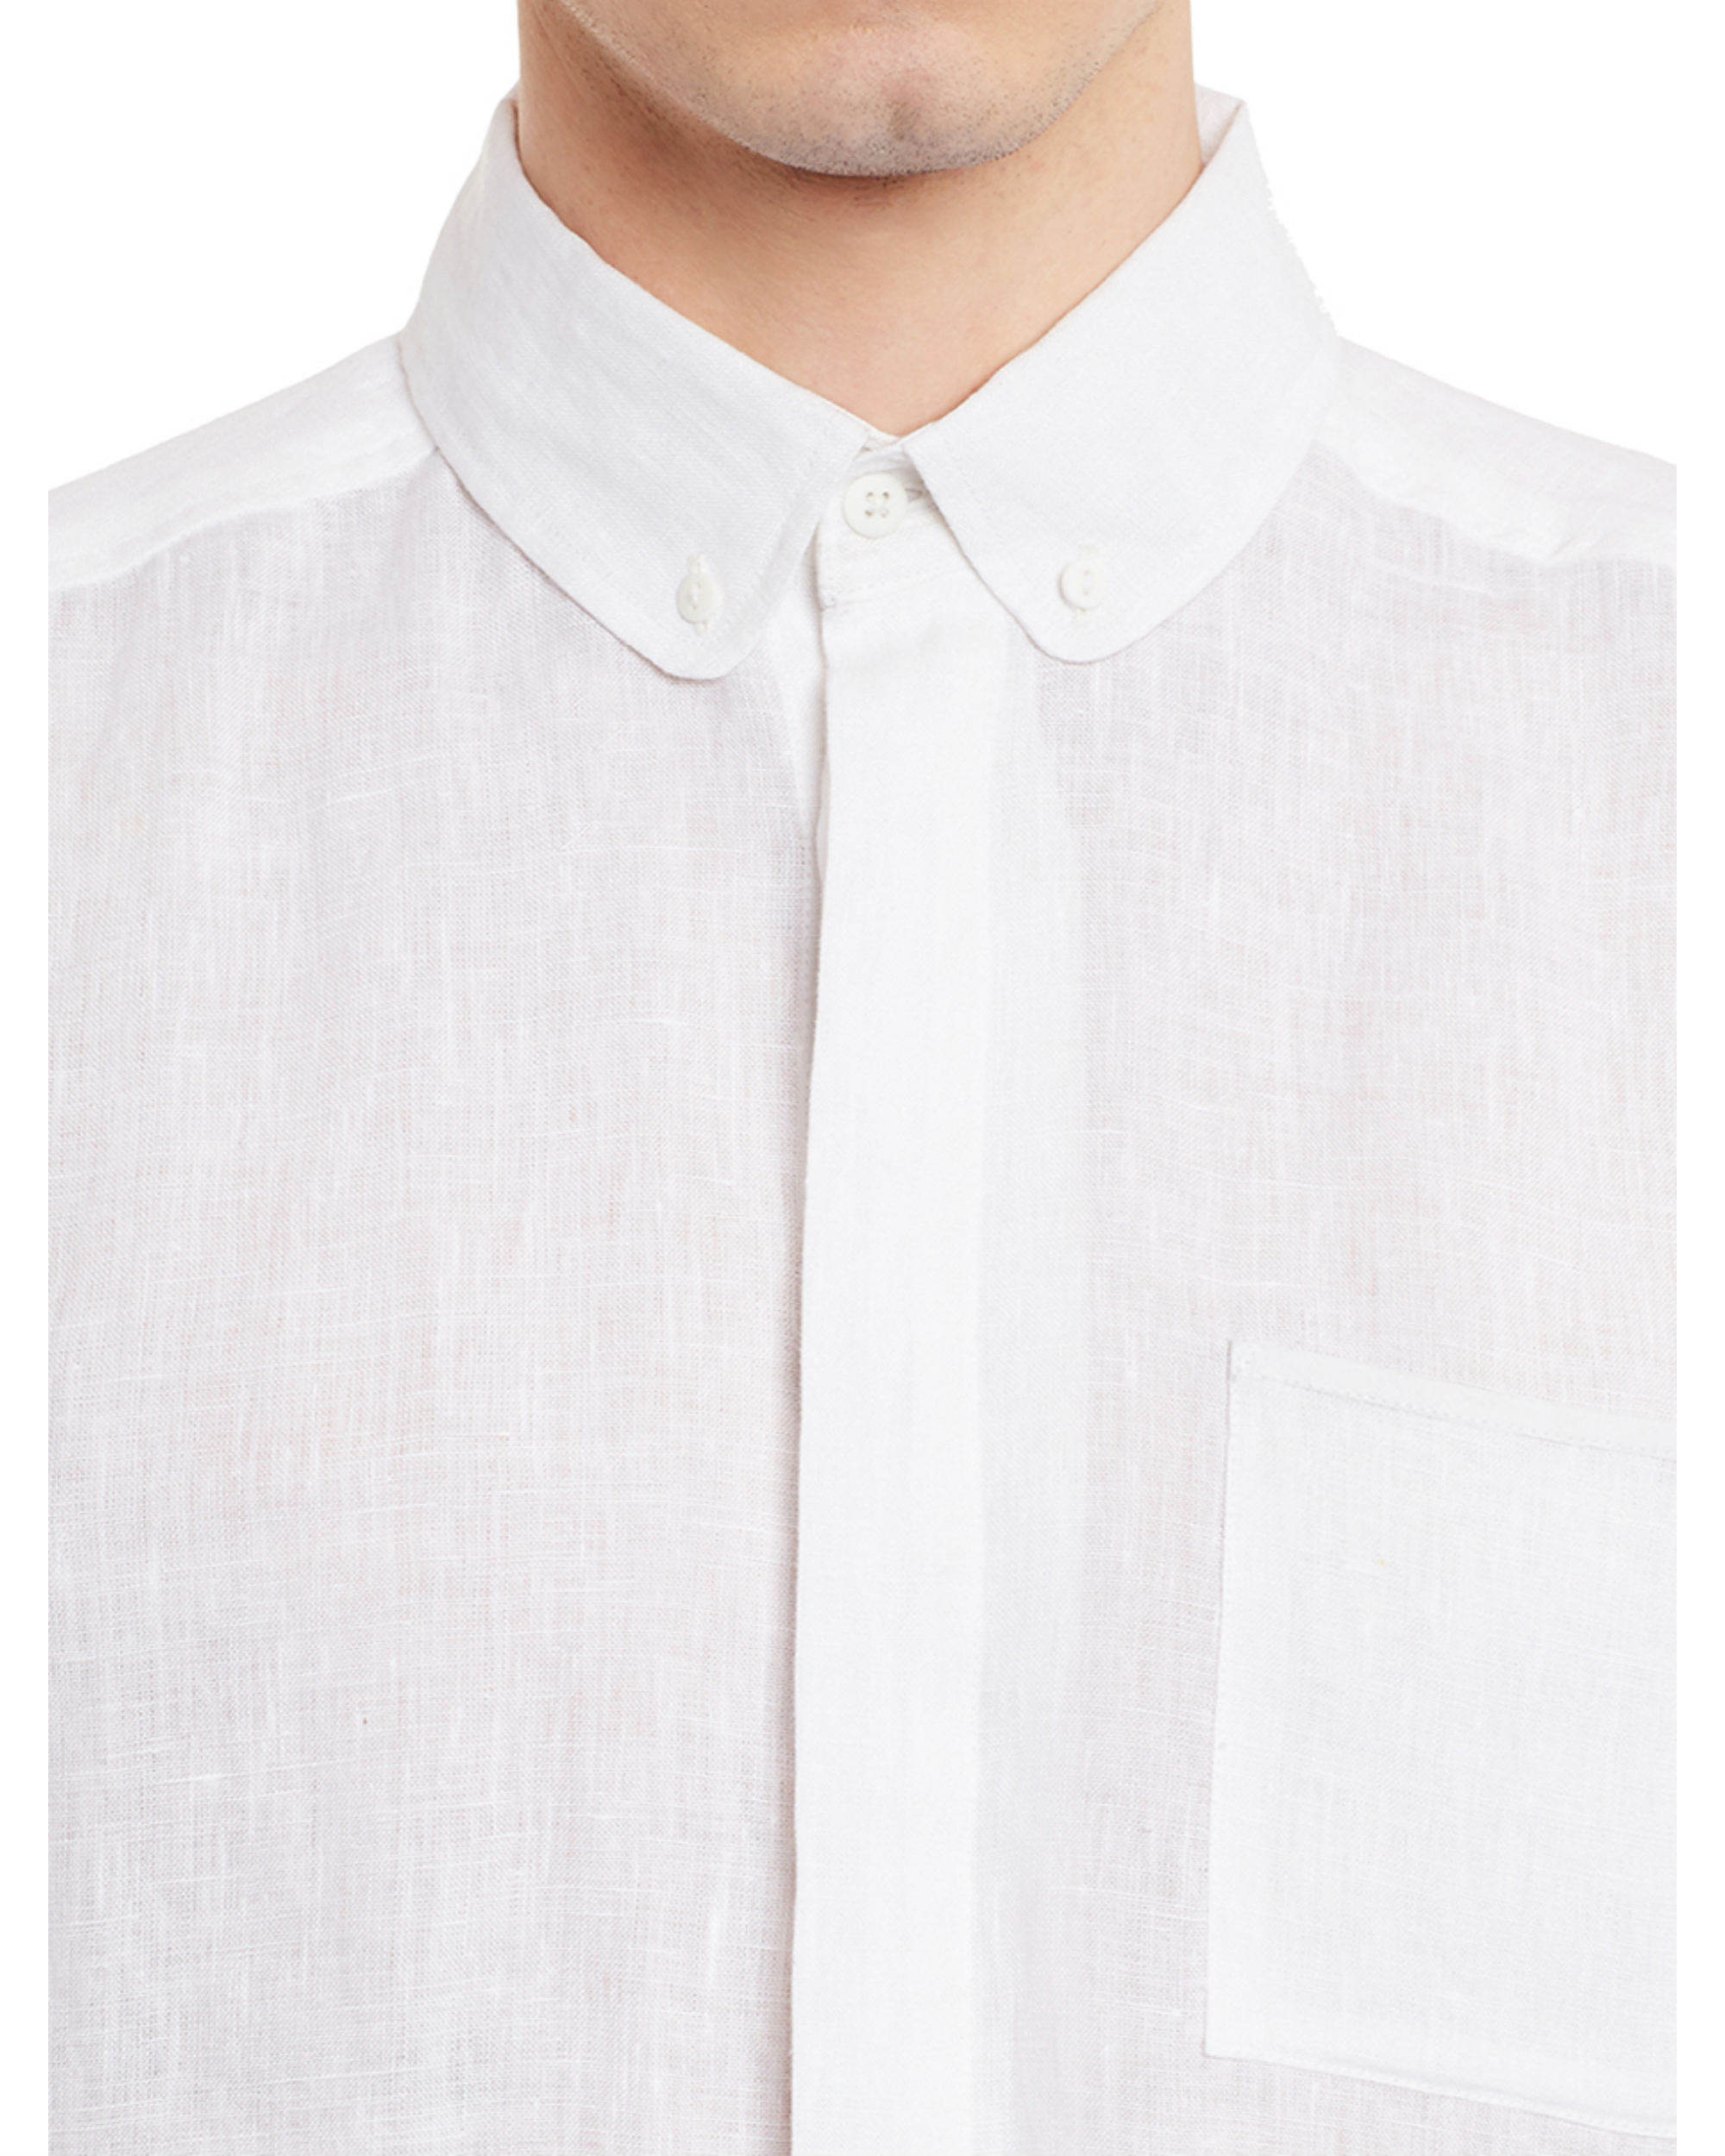 White linen button-down shirt by Dhatu Design Studio | The Secret Label